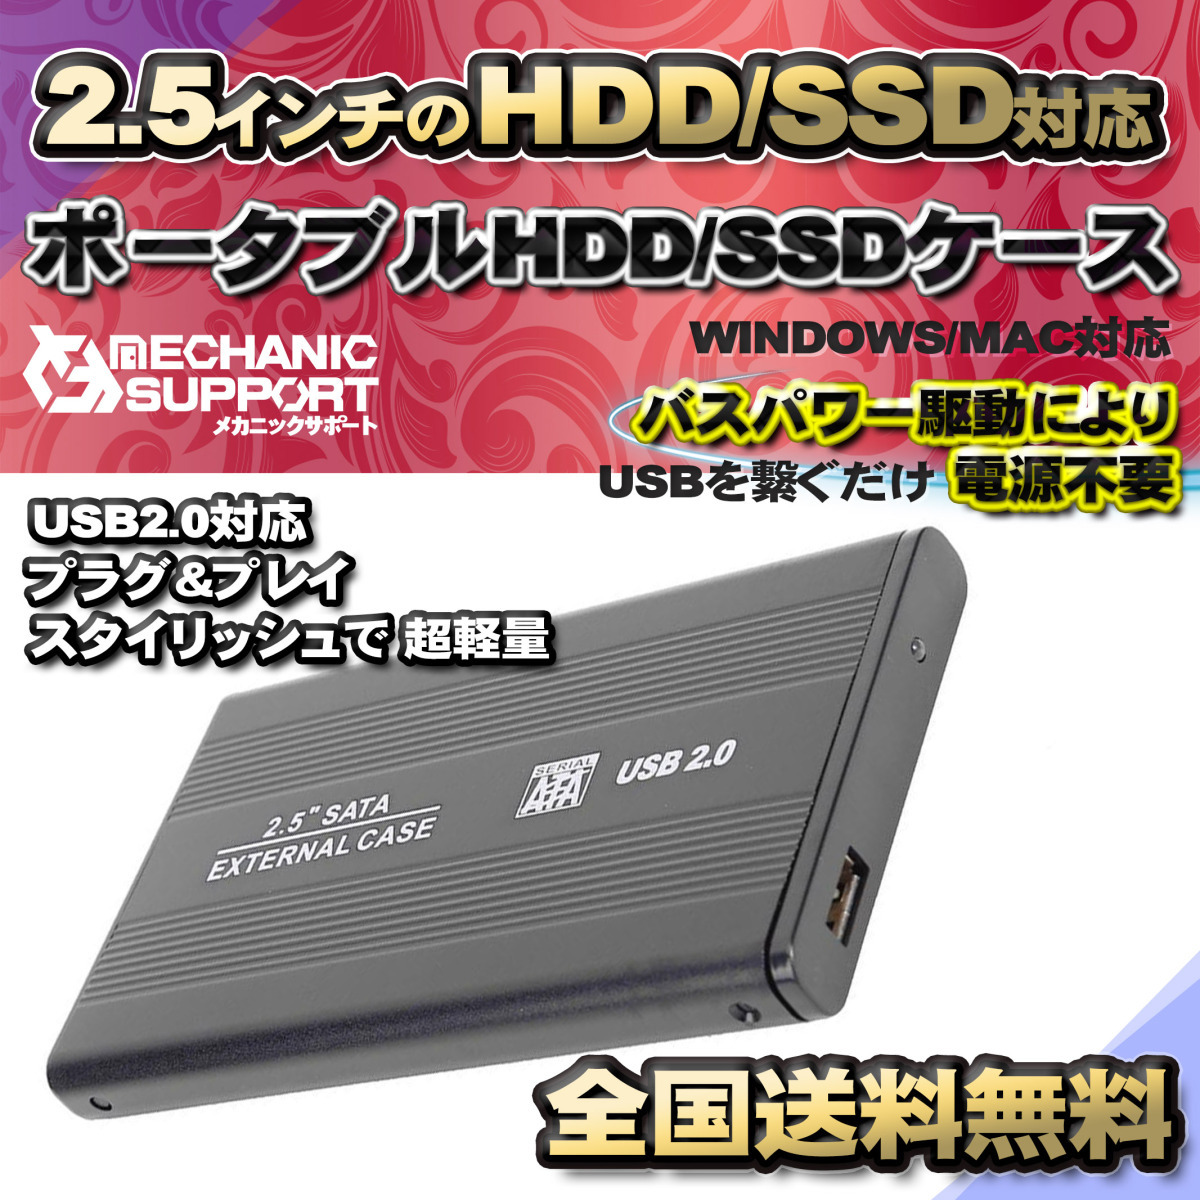 【USB2.0対応】【アルミケース】 2.5インチ HDD SSD ハードディスク 外付け SATA 2.0 USB 接続 【ブラック】_画像1